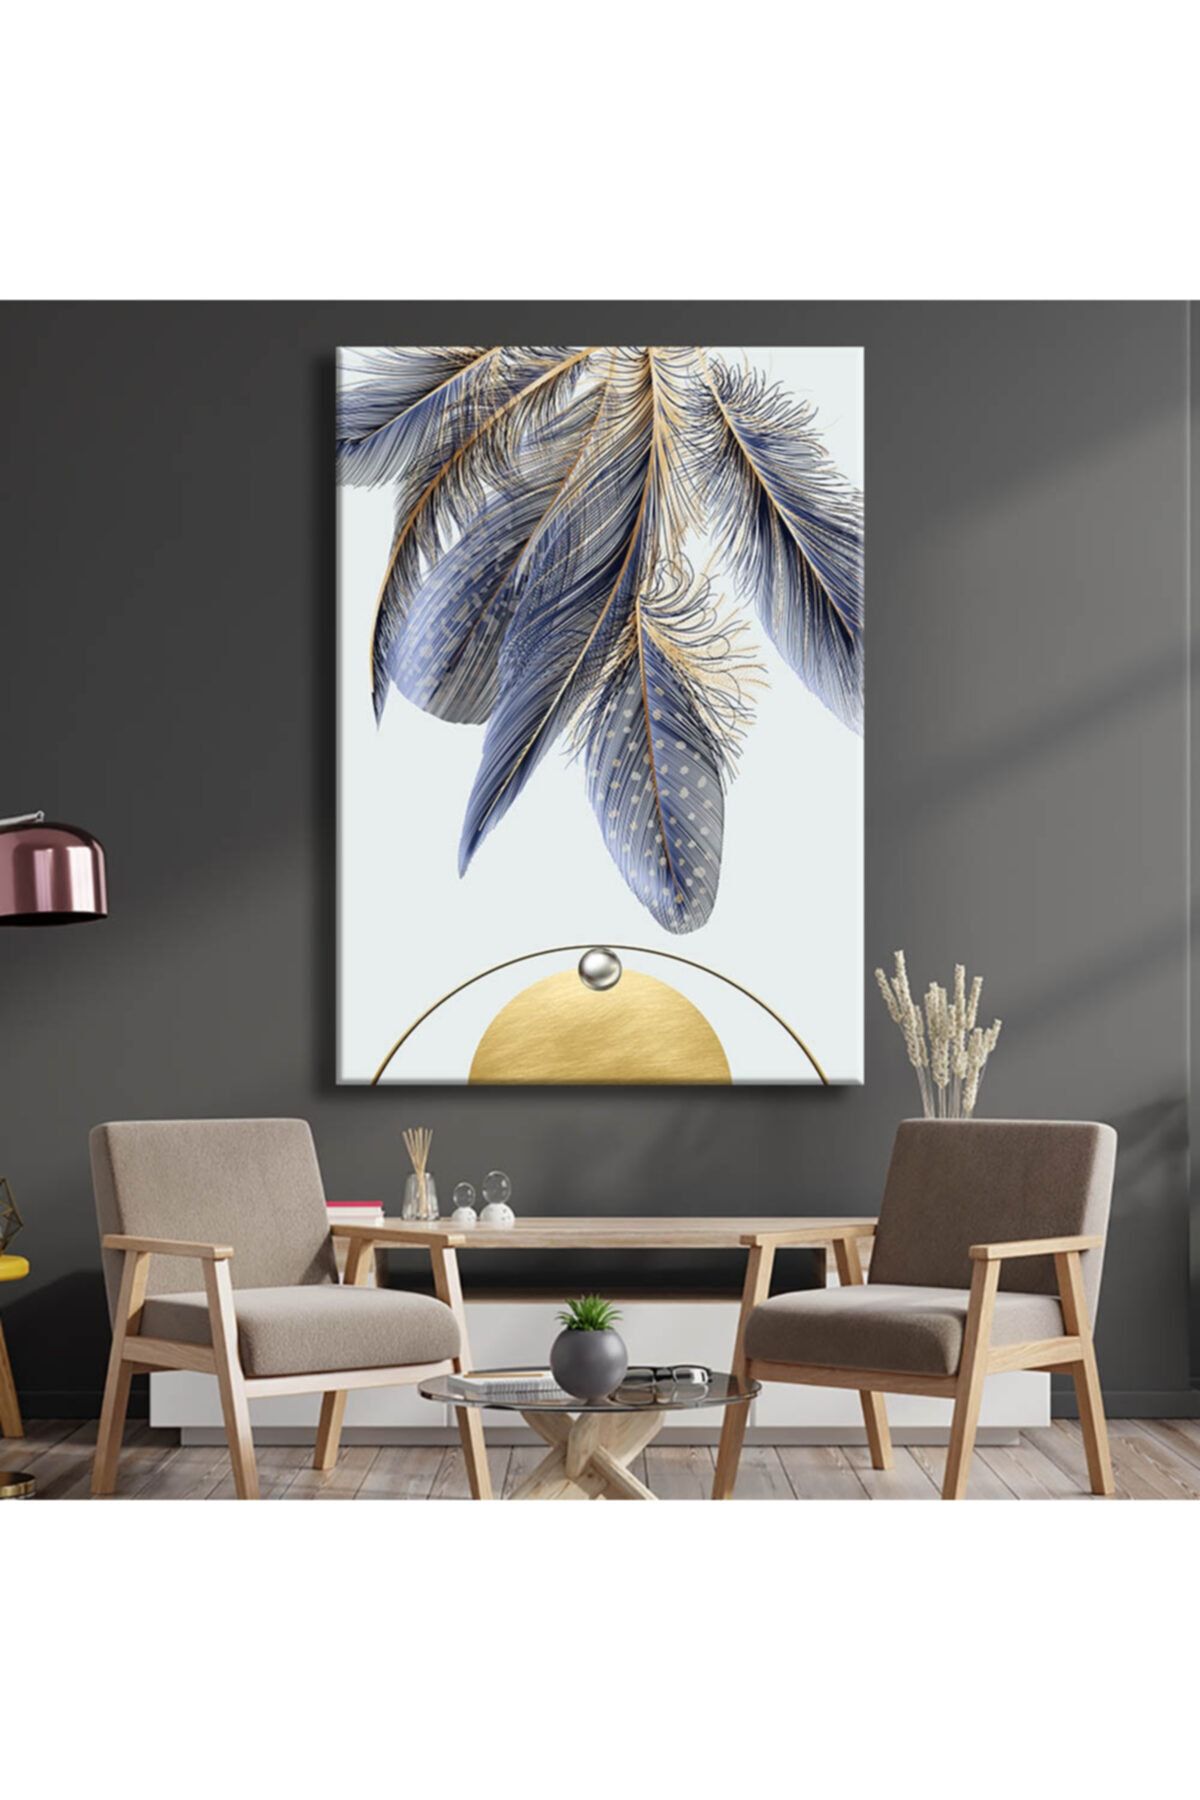 Voovart Muhteşem Kuş Tüyleri Dekoratif Kanvas Tablo - Voov1288